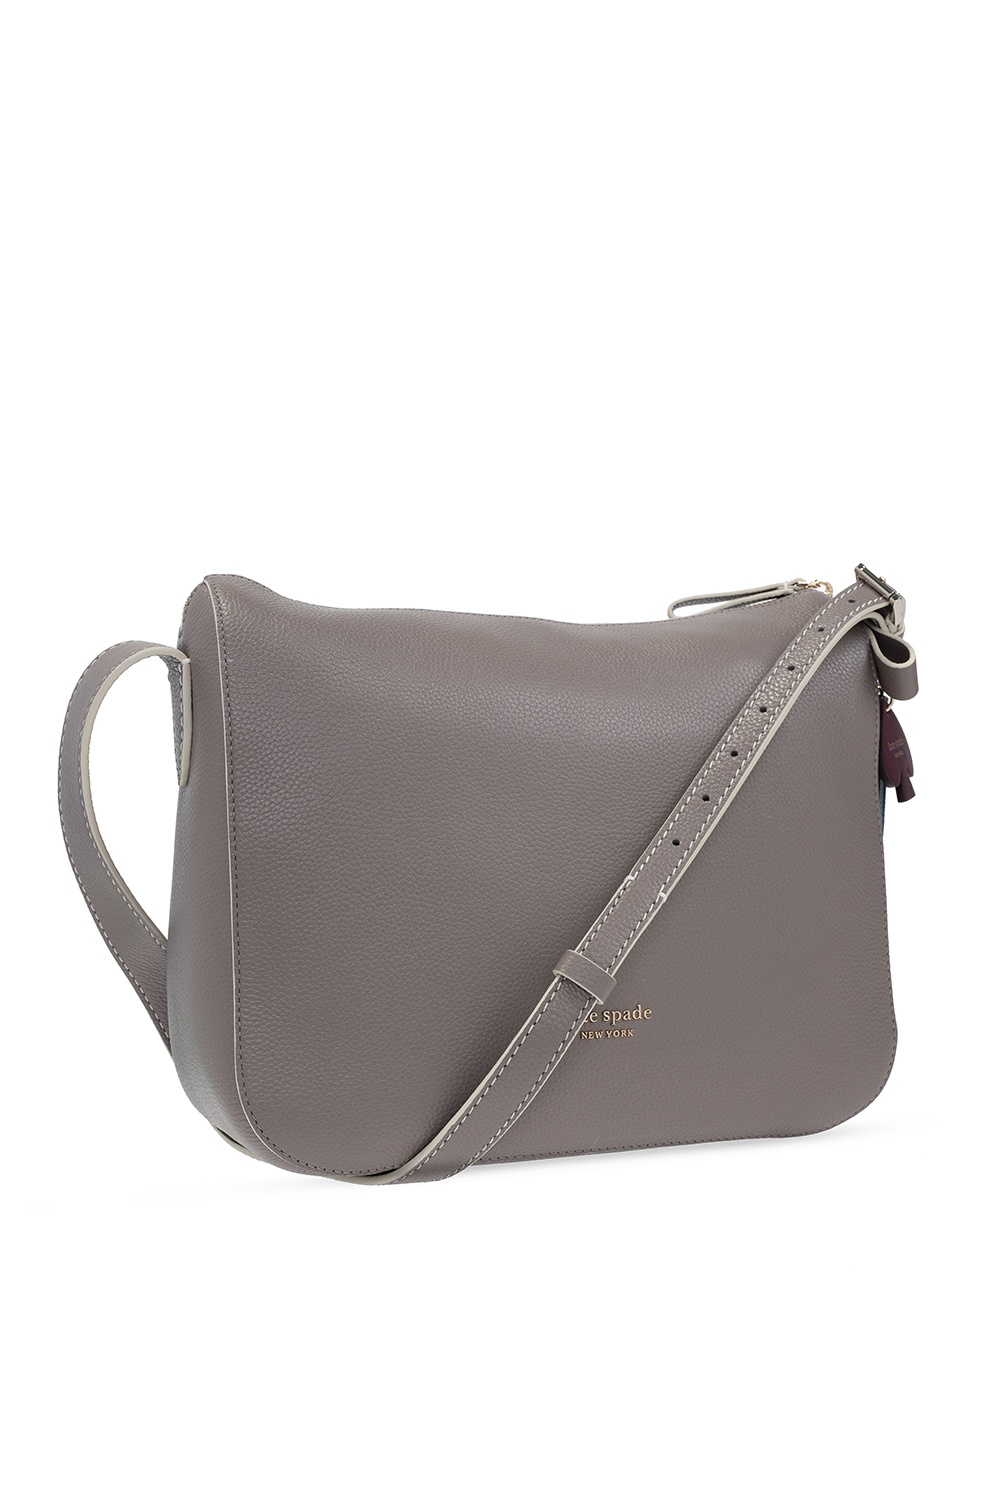 Kate Spade 'Anyday' shoulder bag, Women's Bags